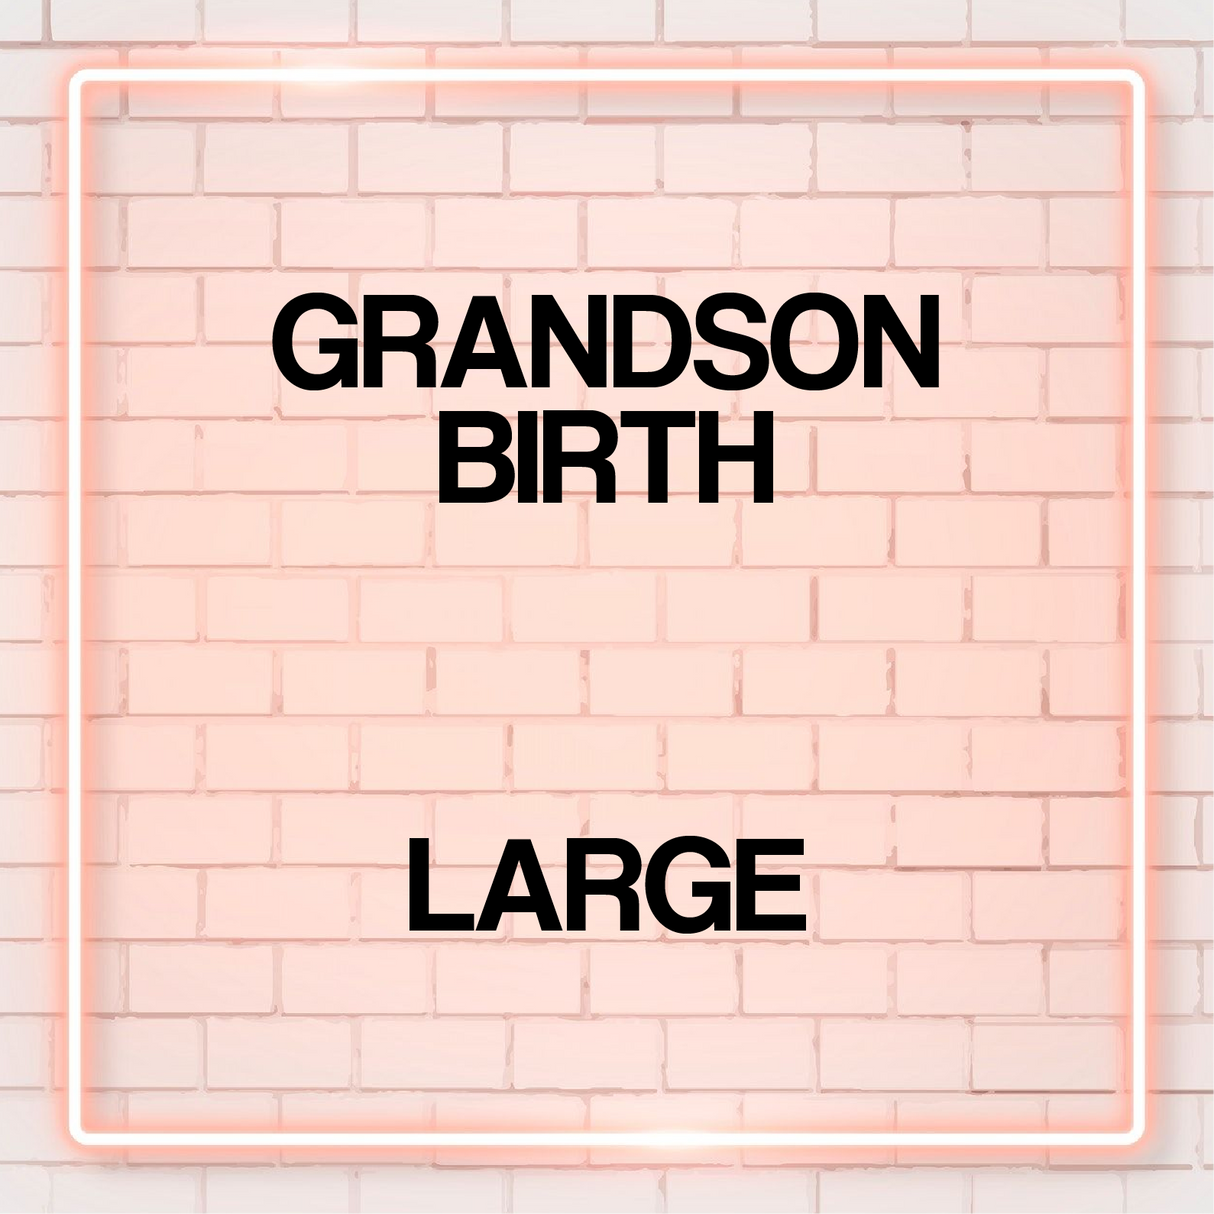 Birth - Grandson